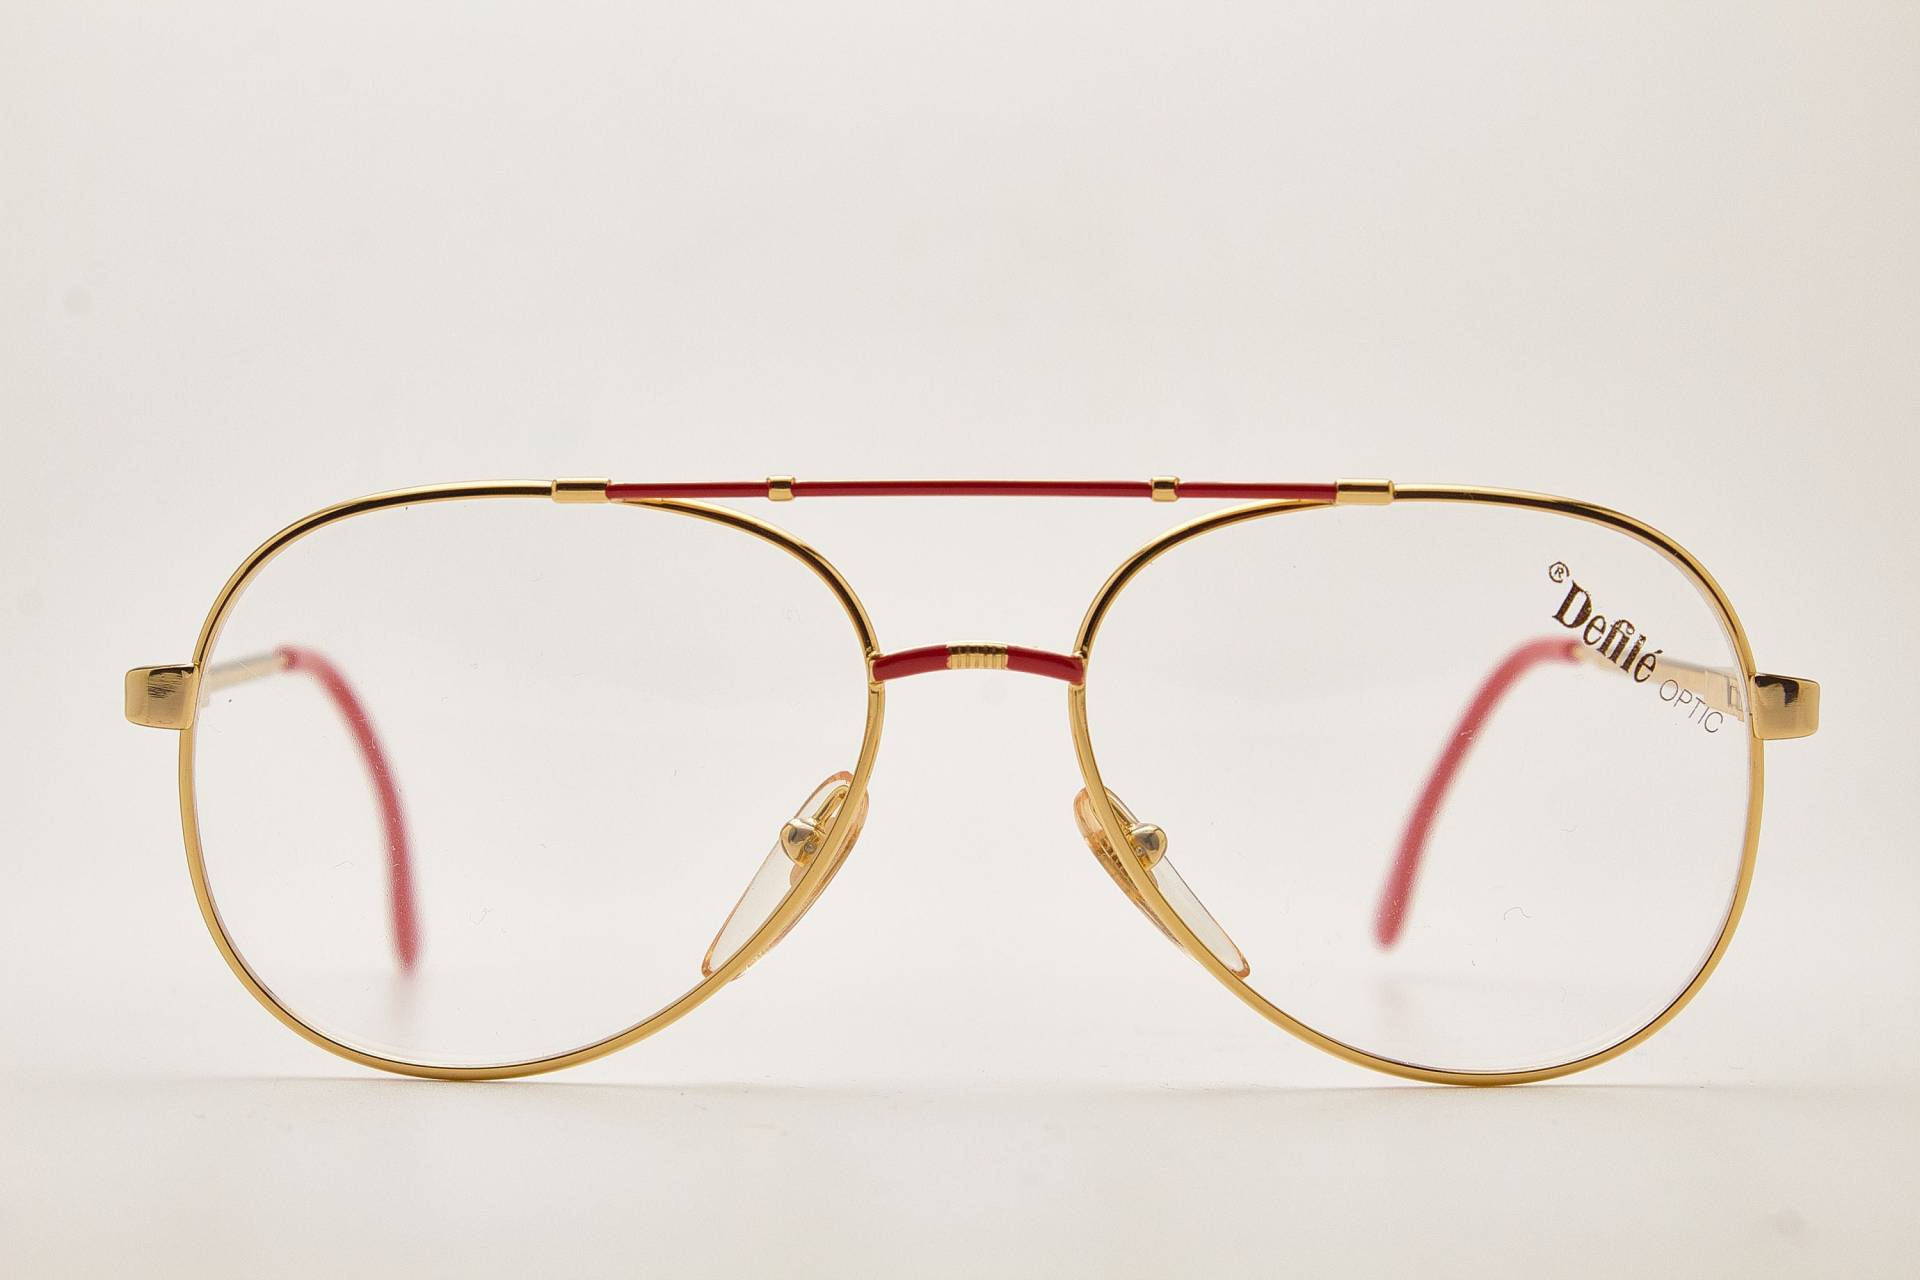 1980Er Jahre Brille/Men's Vintage Eyewear Defile Optic Red/Gold Metal Frame/Hipster Brille/ Piloten Sonnenbrille/ Oversize Fliegerbrille von VintageGlassesVault